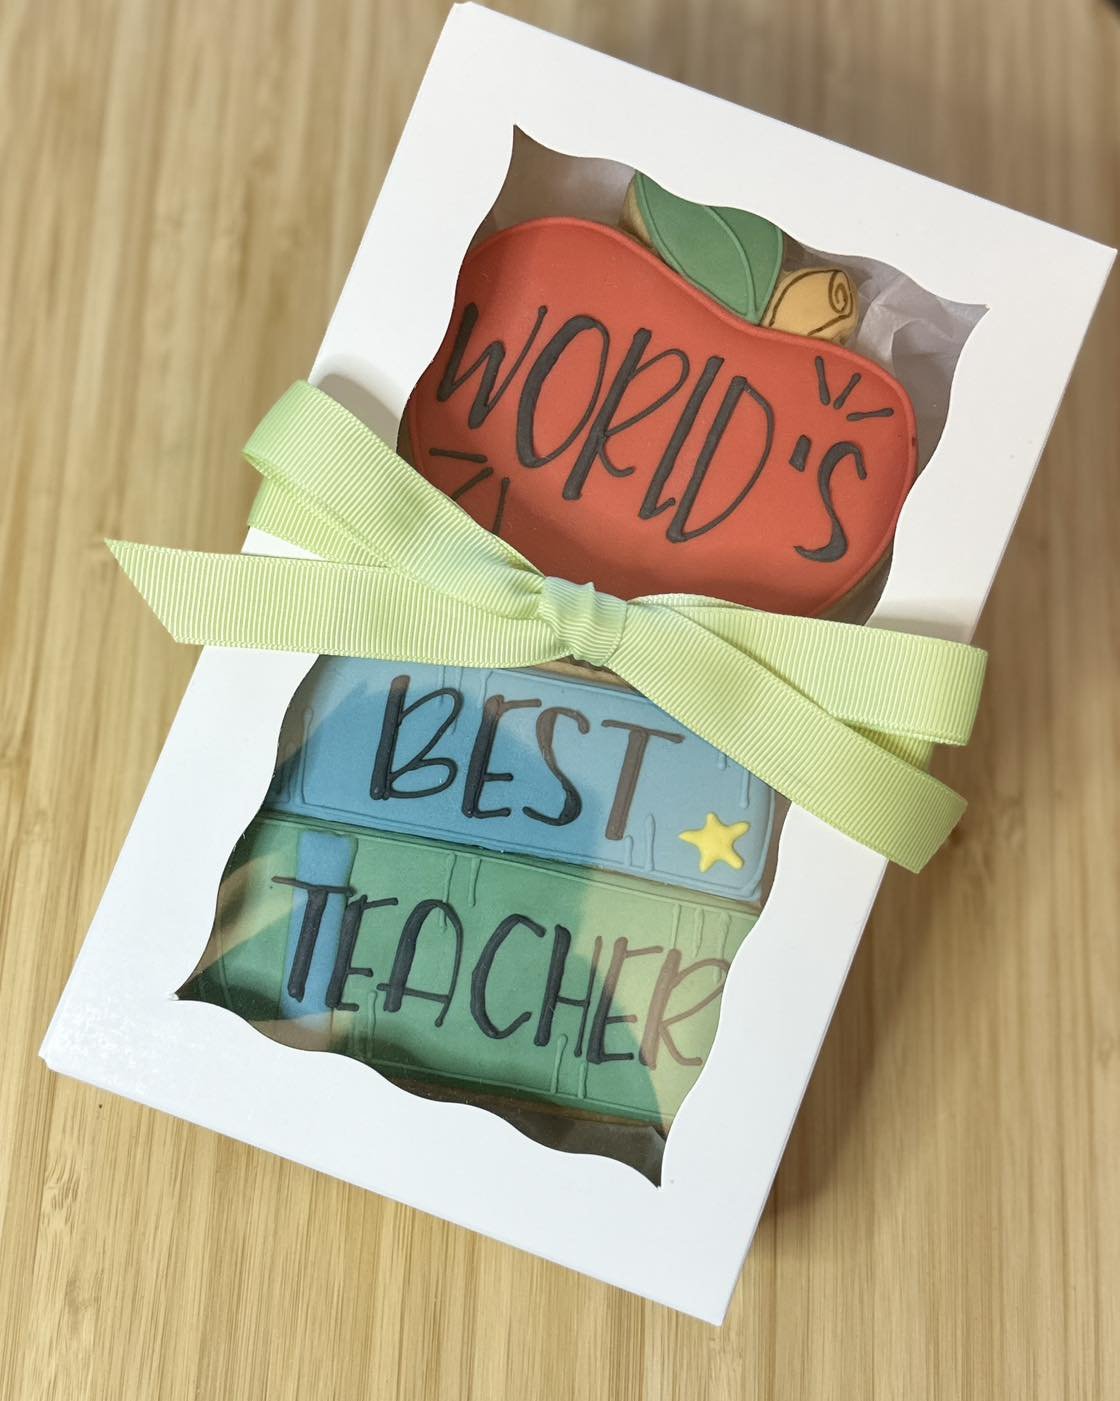 Teacher Appreciation Week starts Monday! All teachers deserve a sweet treat. ❤️❤️❤️